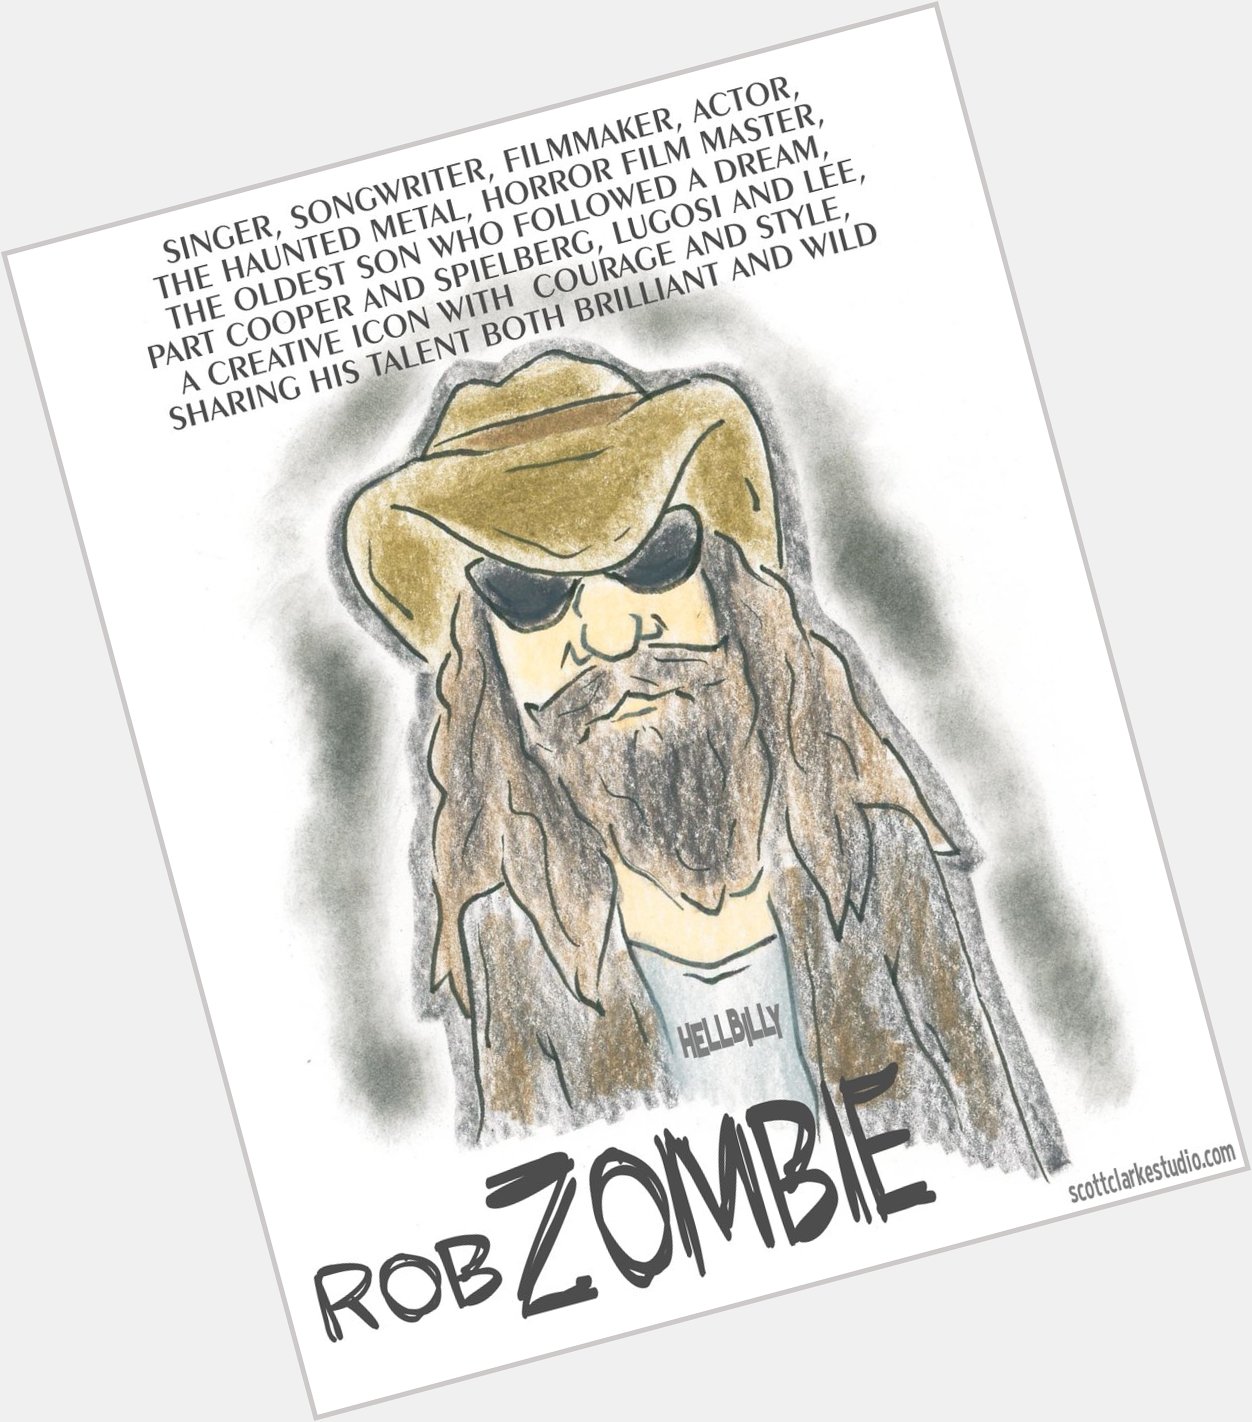  HAPPY BIRTHDAY Rob Zombie-toon! 